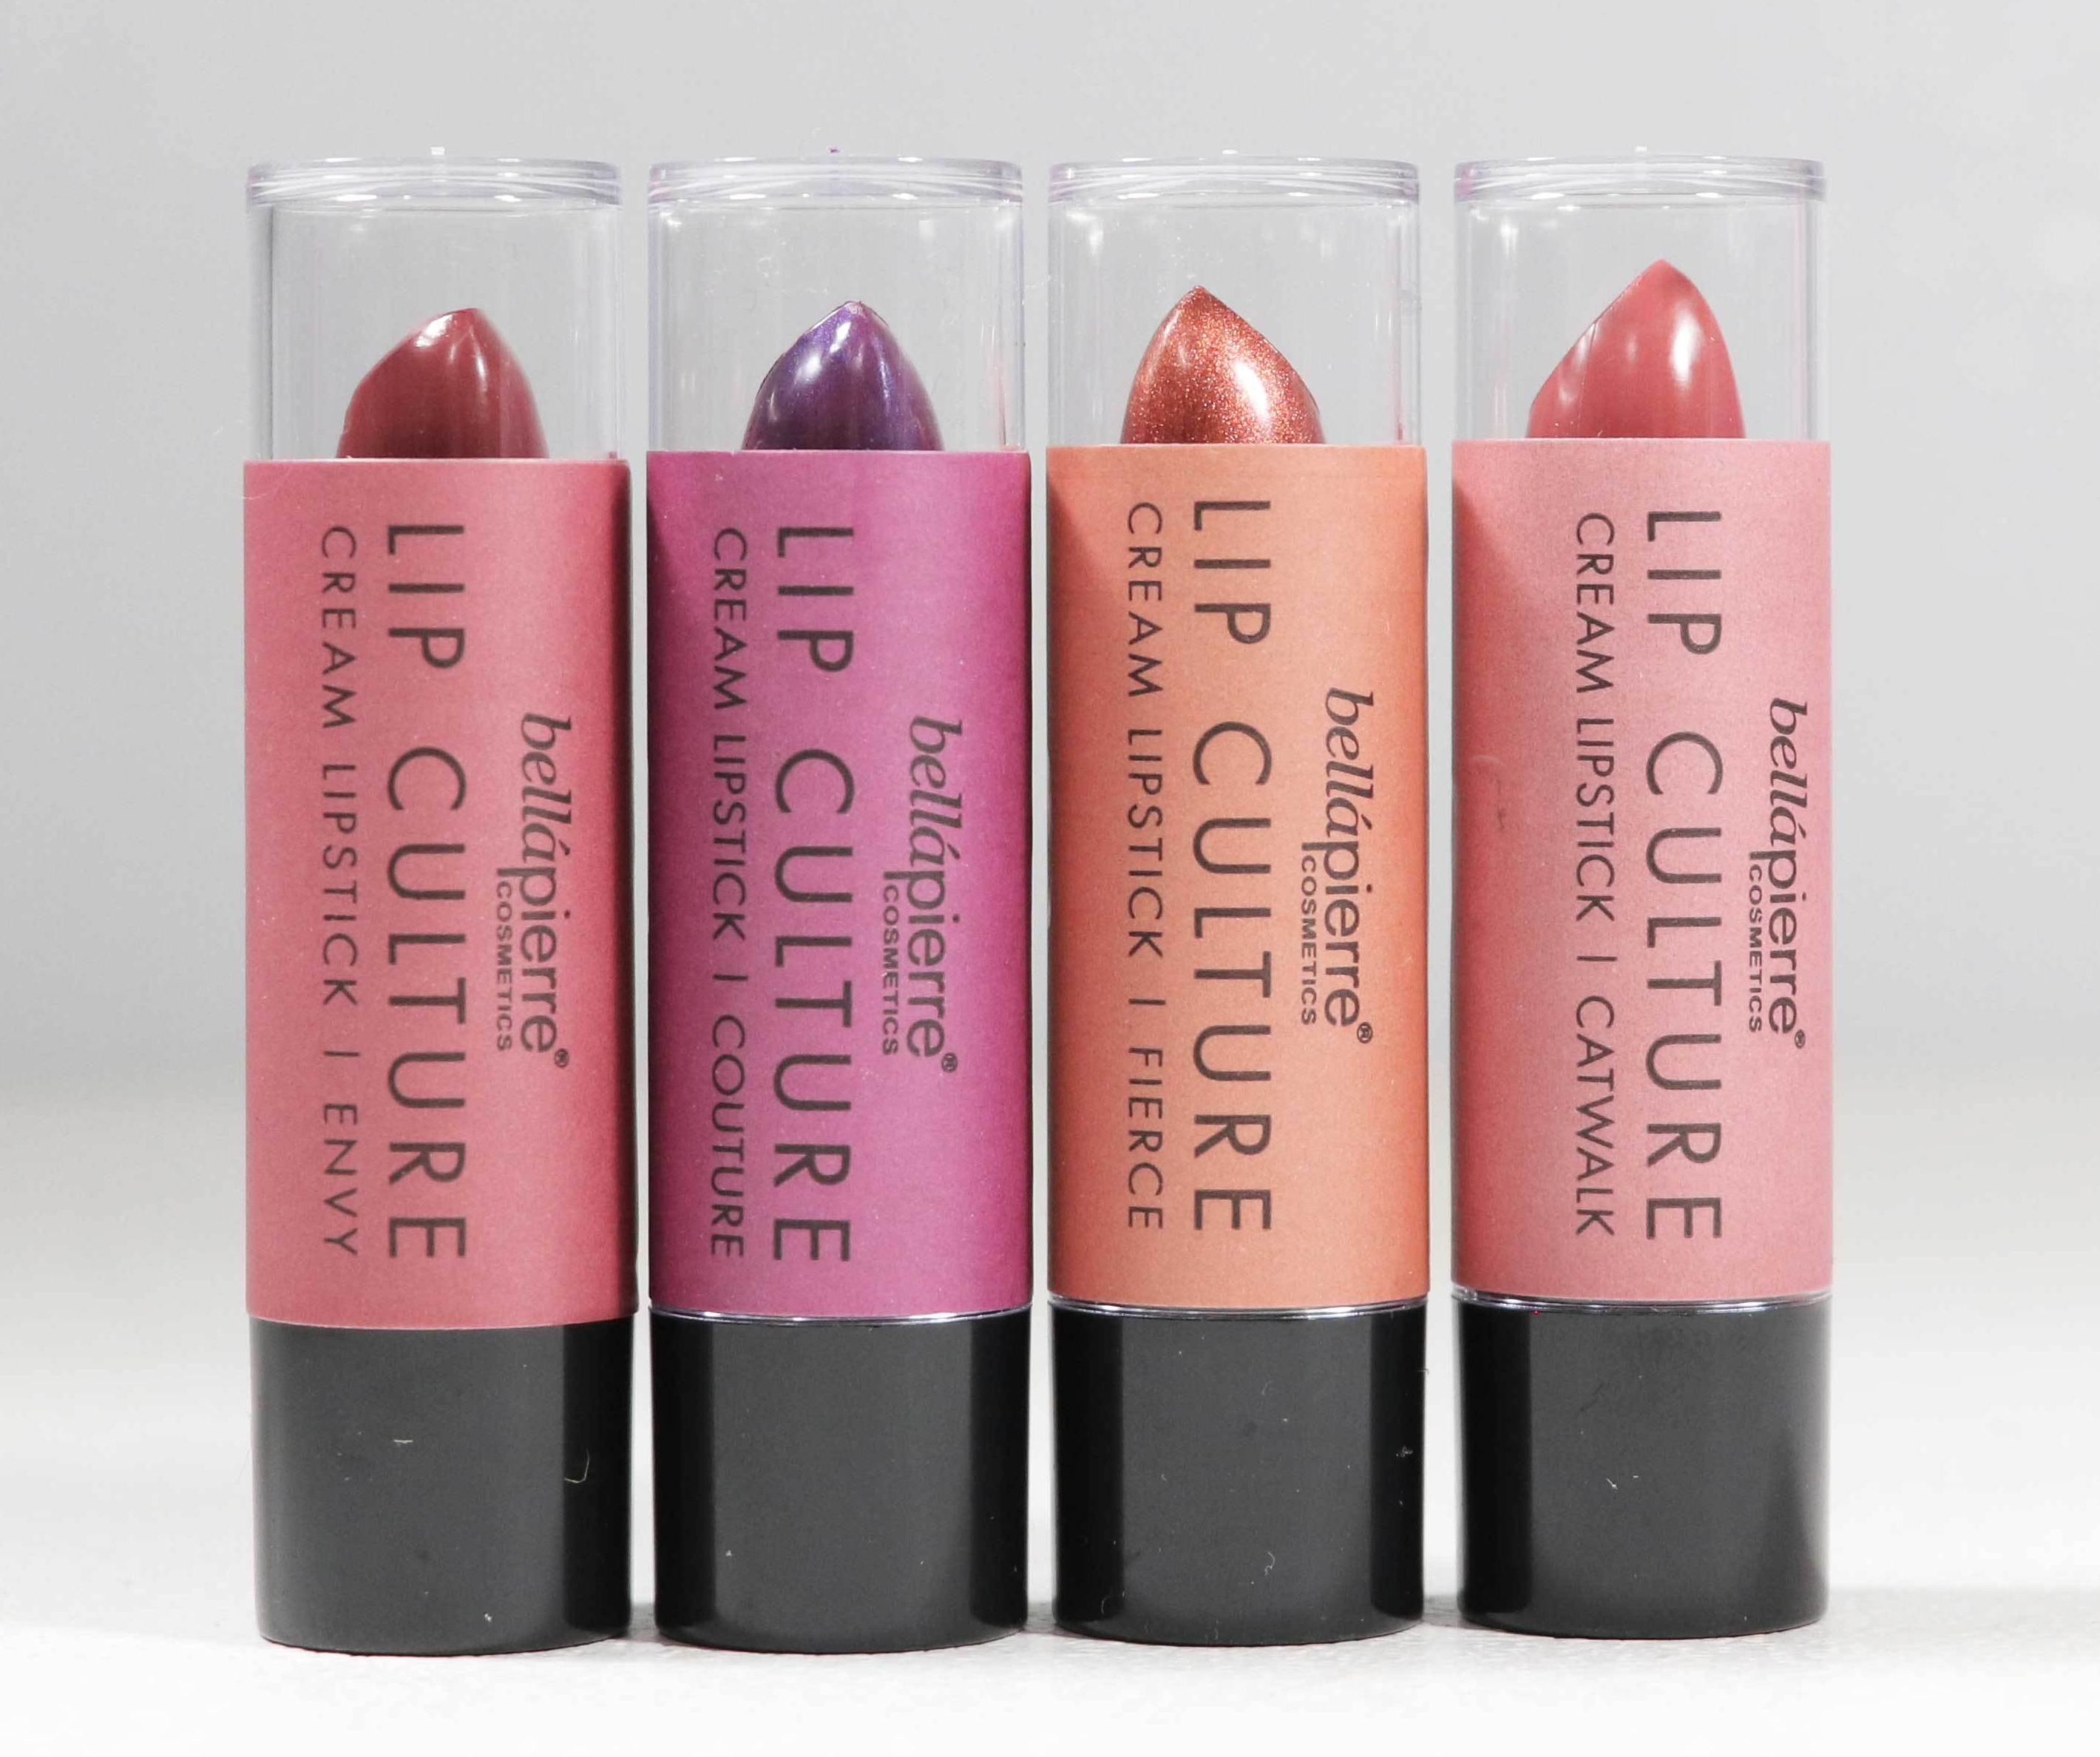 Bellapierre Lip Culture Lipstick